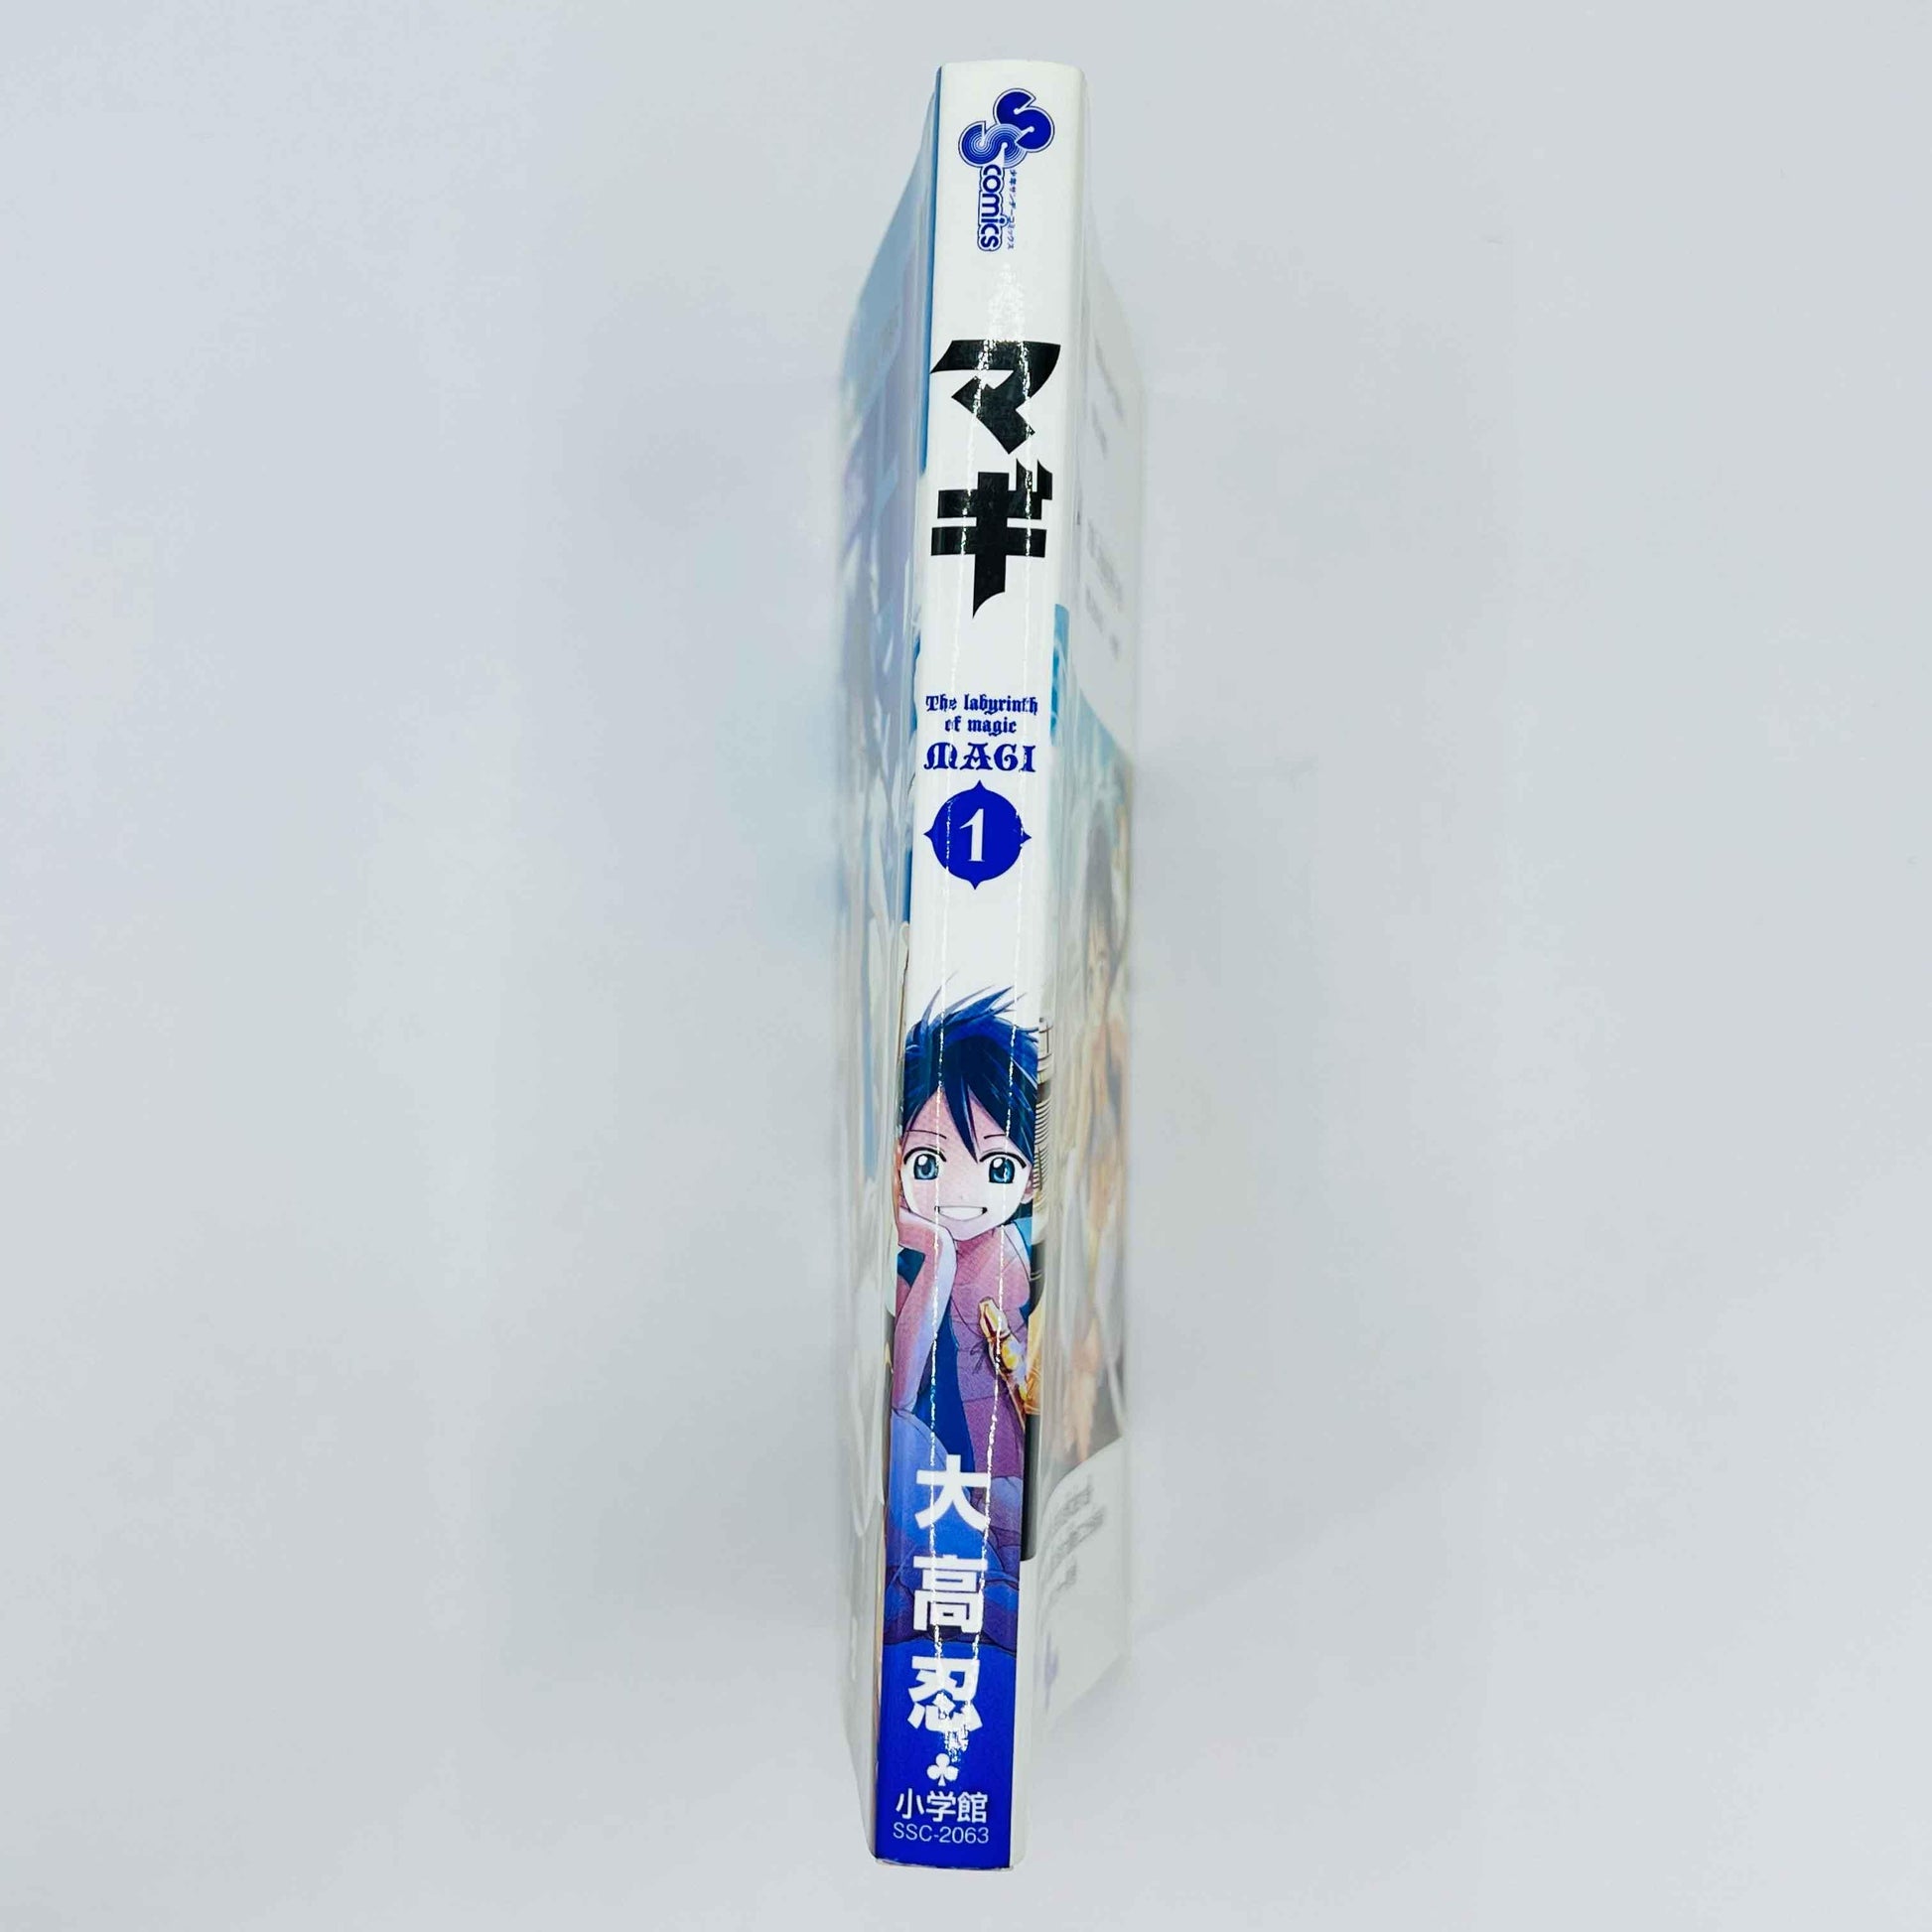 Magi - The Labyrinth of Magic - Volume 01 - 1stPrint.net - 1st First Print Edition Manga Store - M-MAGI-01-001